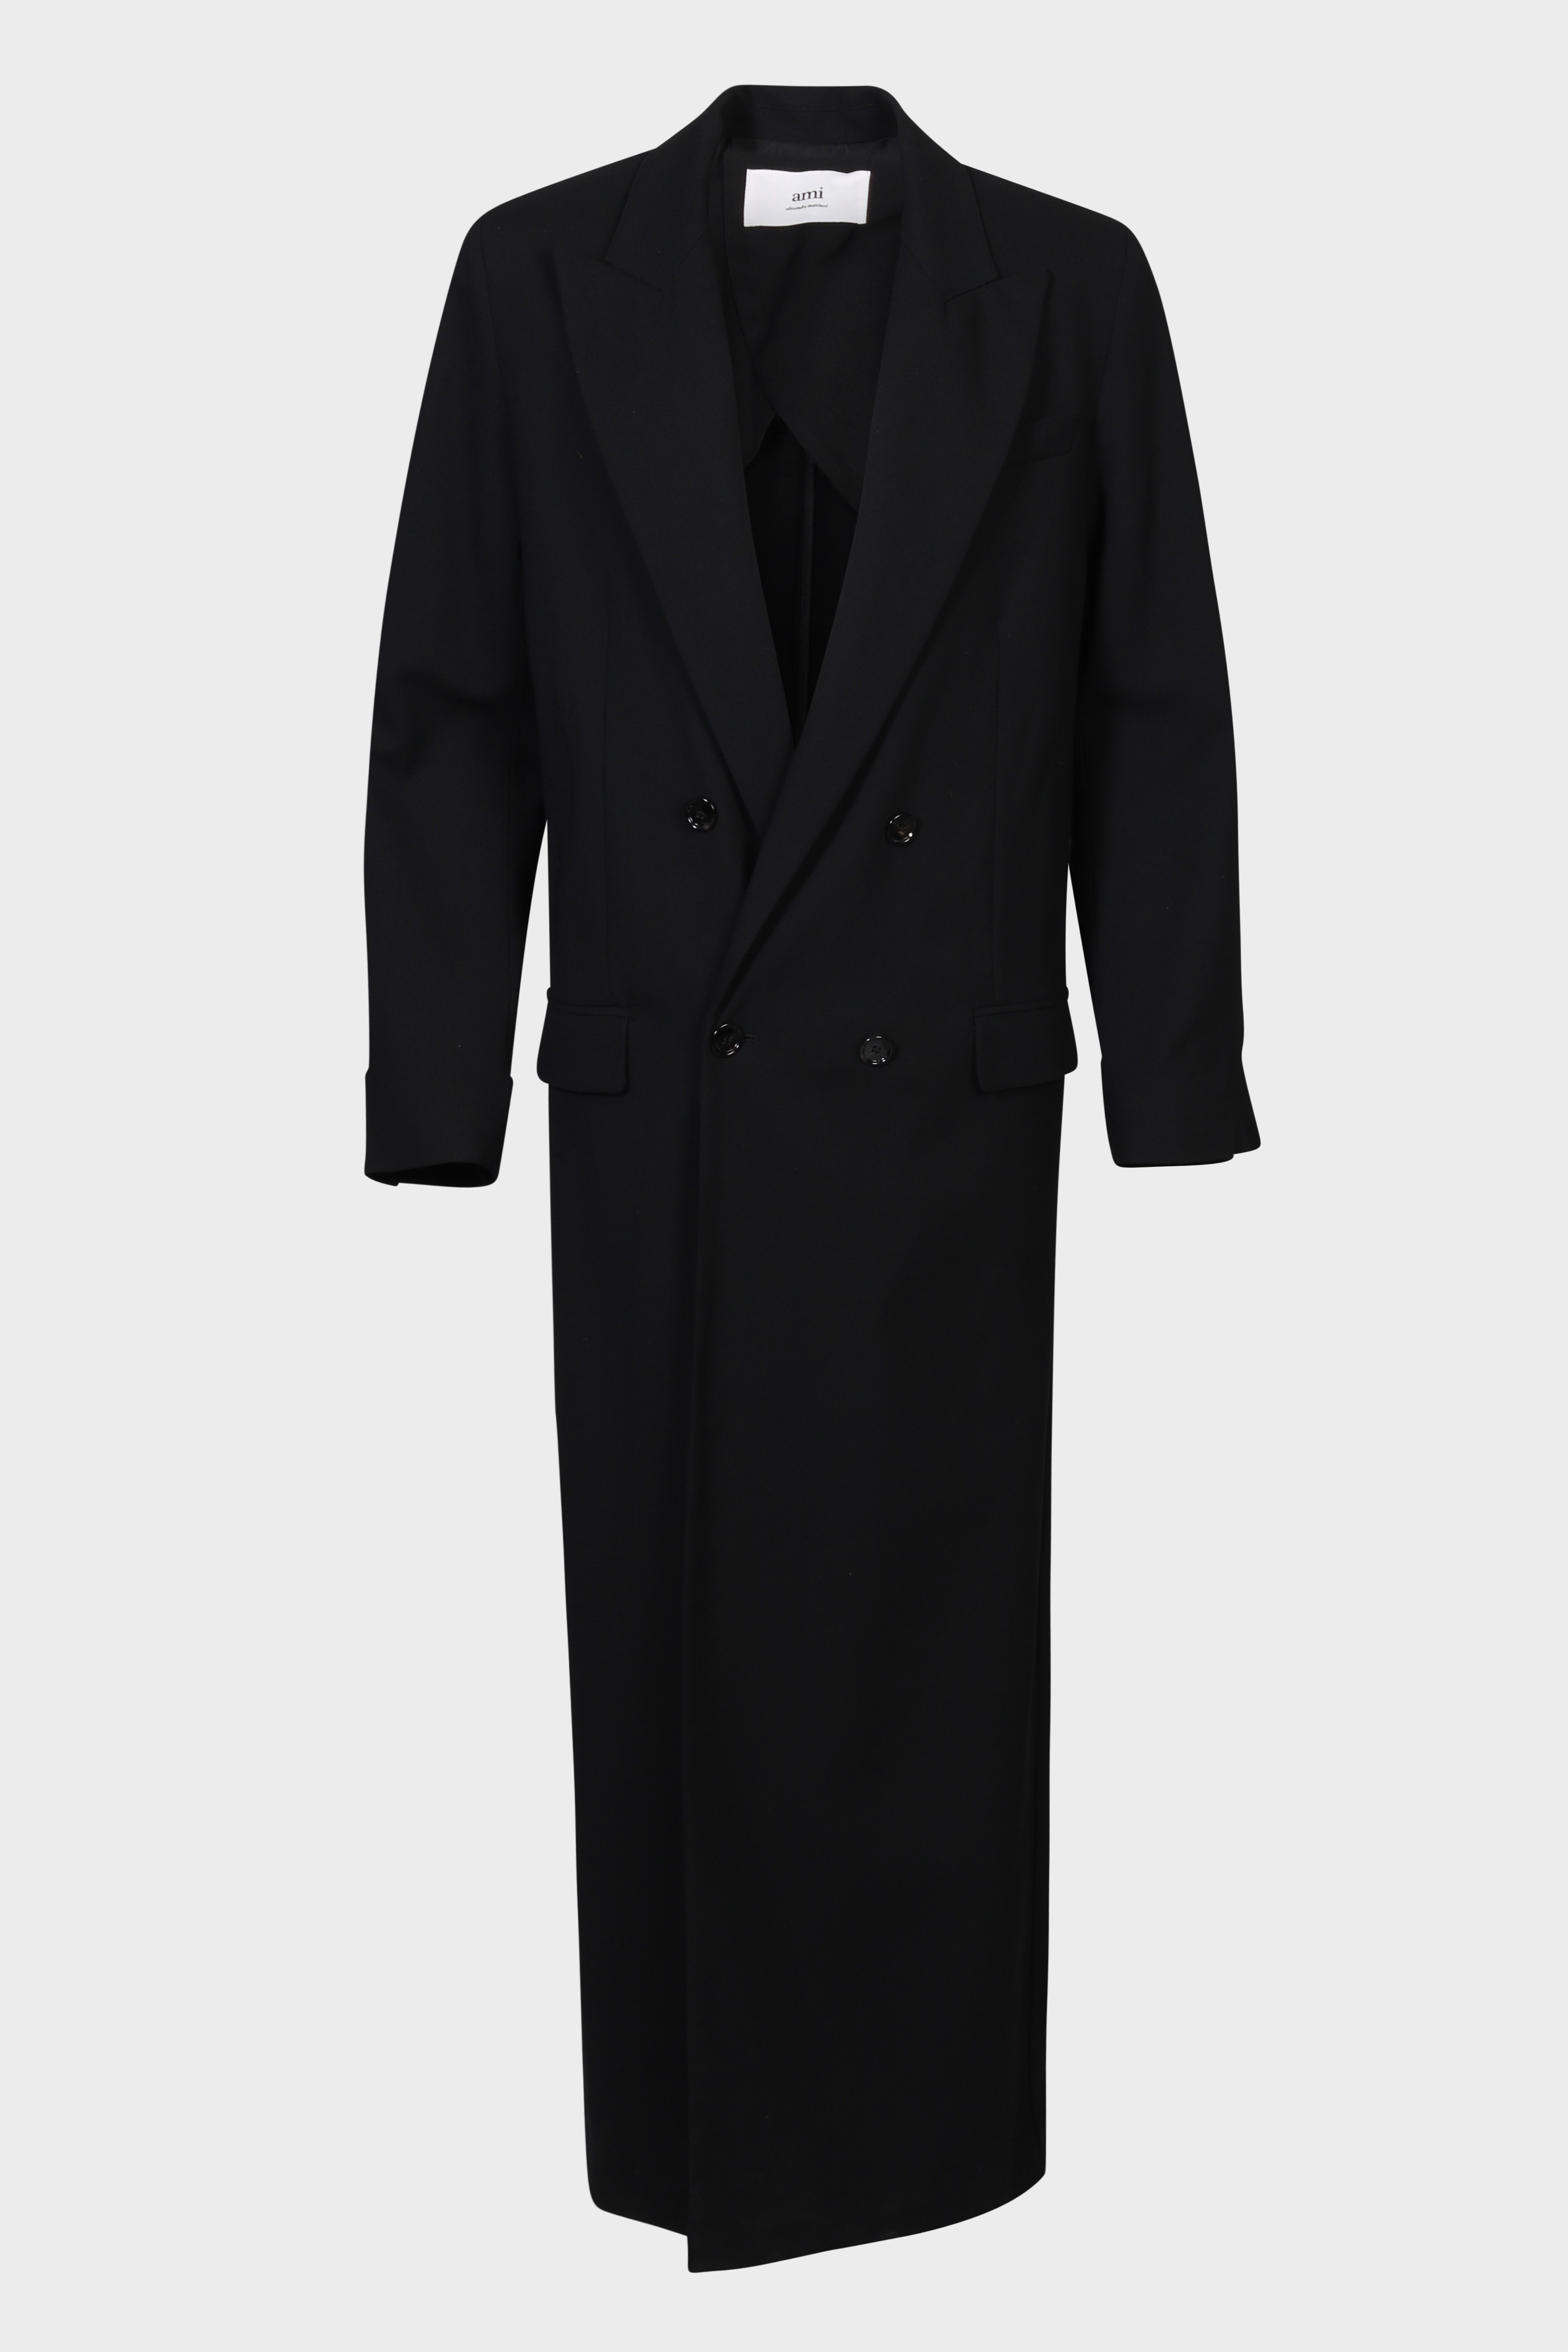 AMI PARIS Gabardine Coat Dress in Black FR38 / DE36